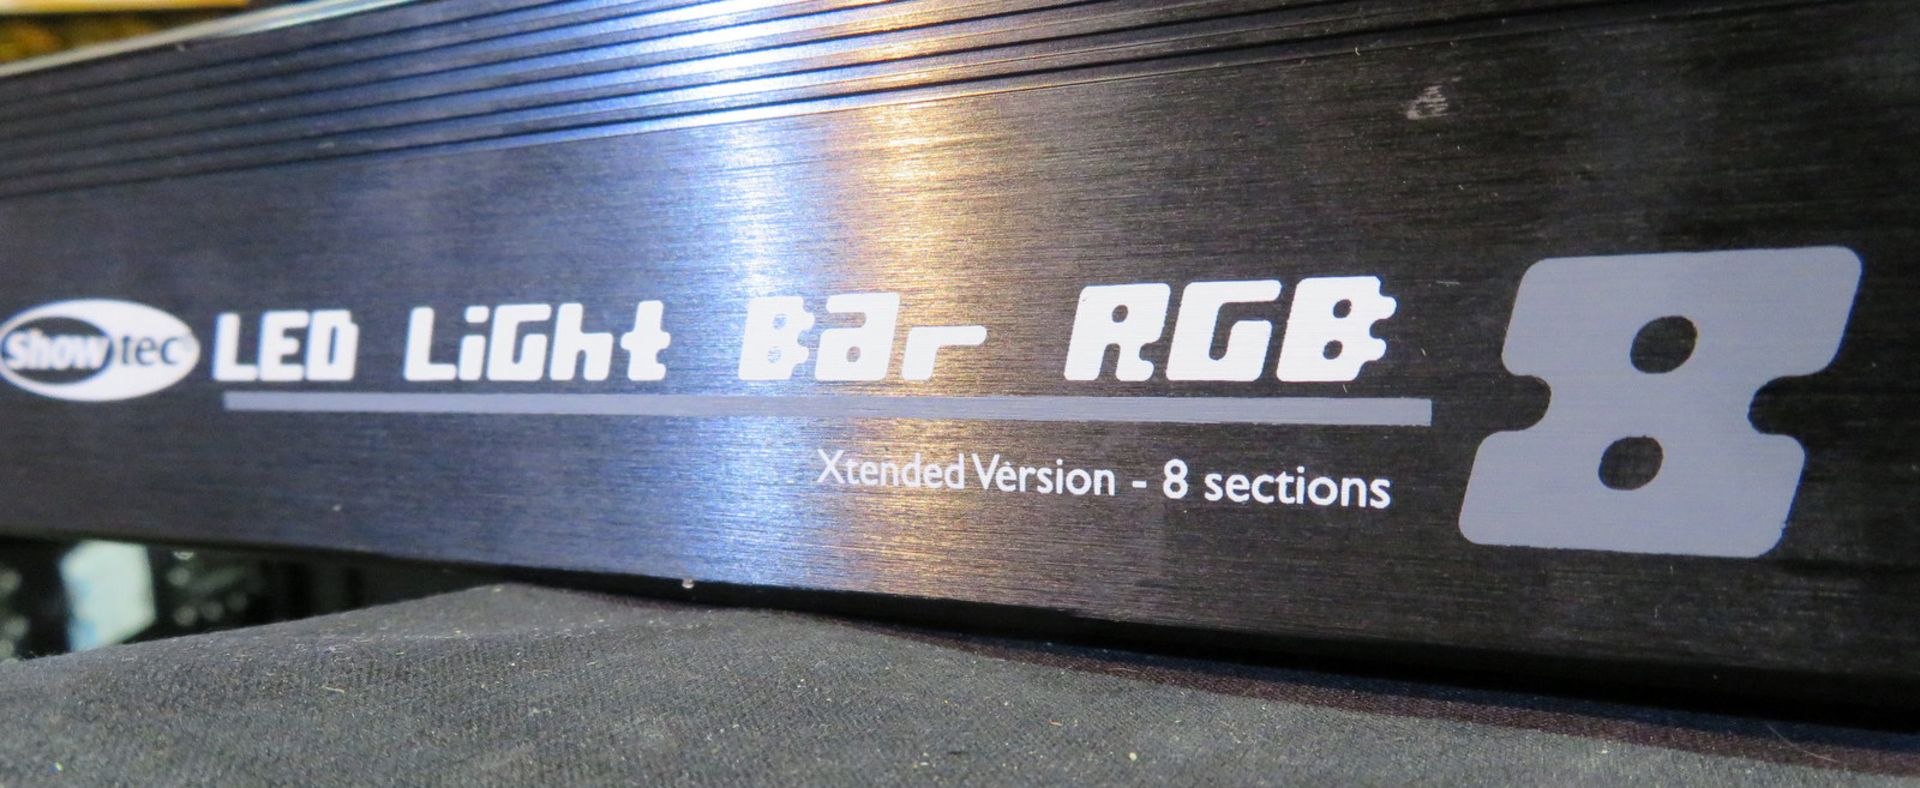 2x Showtec LED Lightbar RGB 8. All working - Image 7 of 7